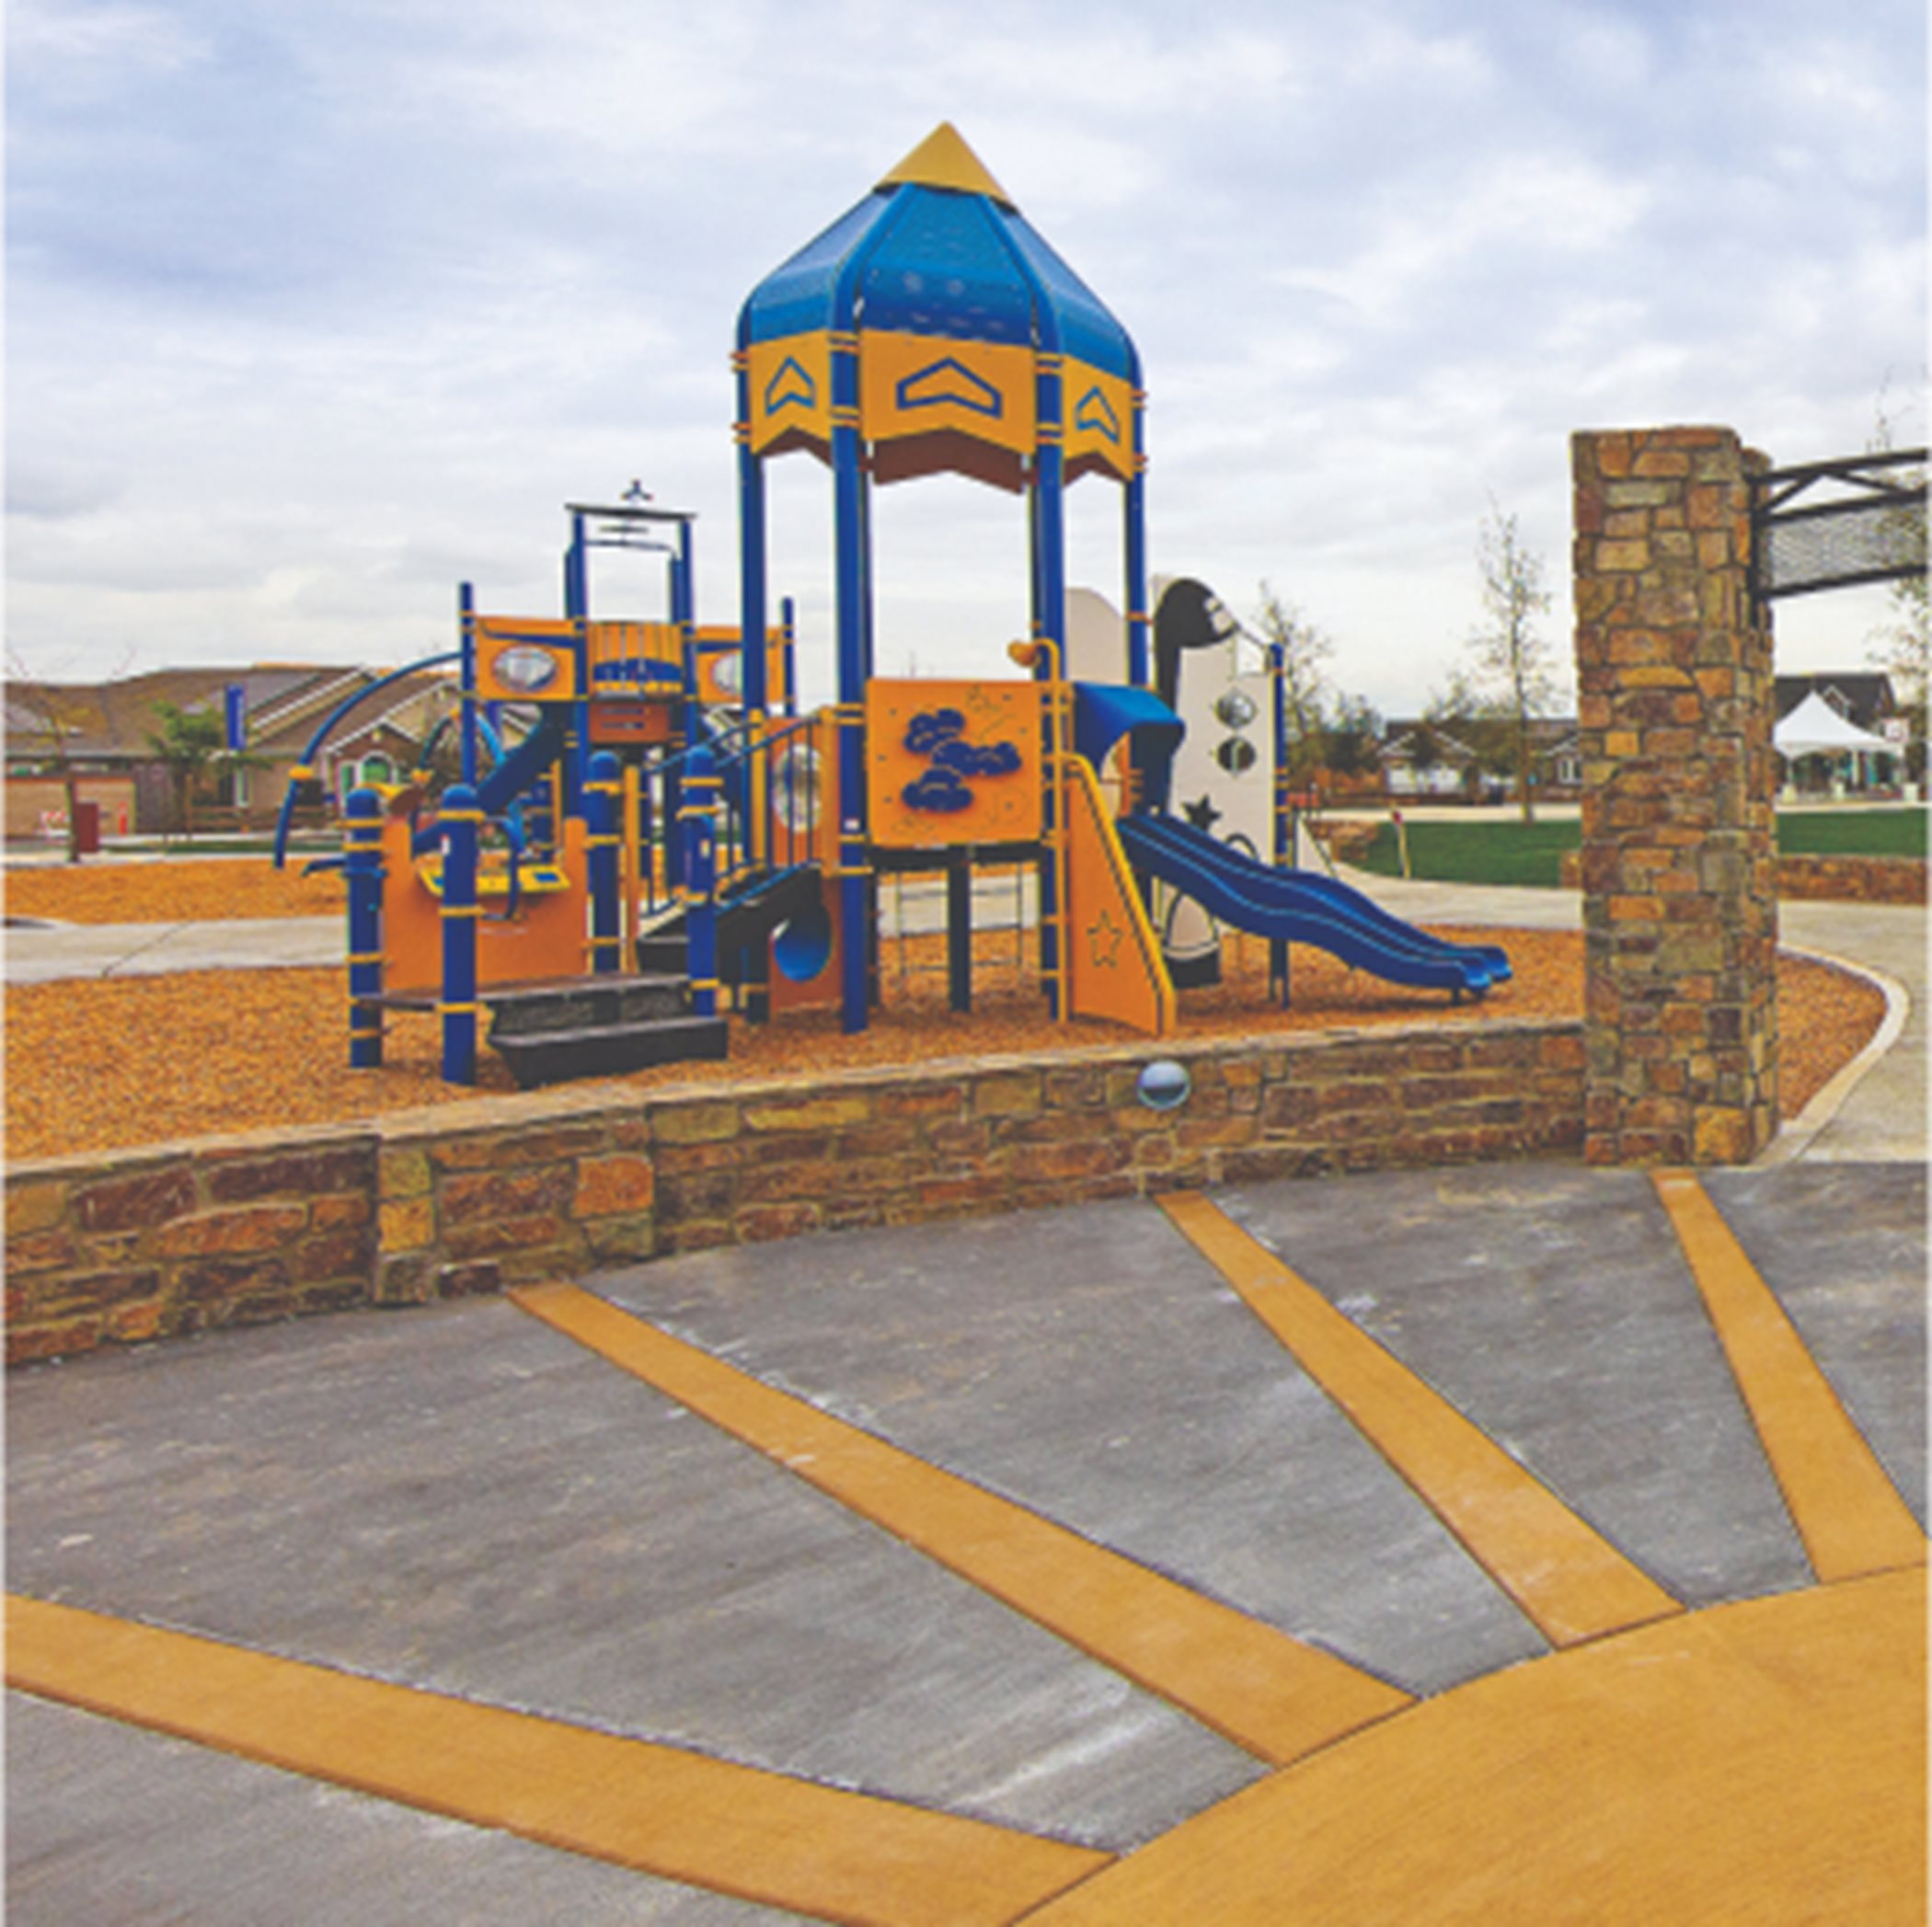 Gossamer Grove playgrounds